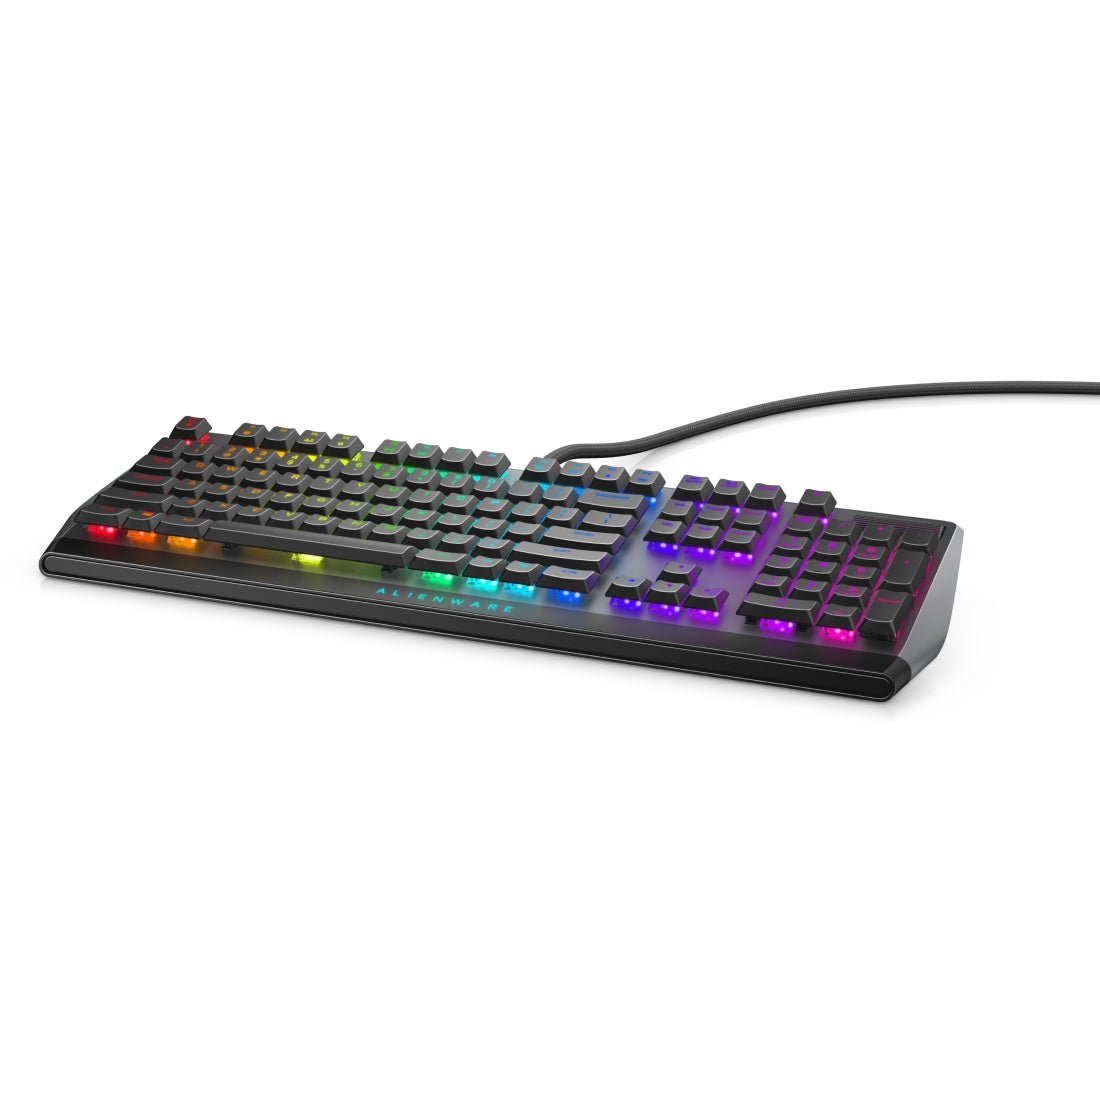 Alienware AW510K RGB Wired Mechanical Gaming Keyboard - Black & Grey - كييبورد - Store 974 | ستور ٩٧٤